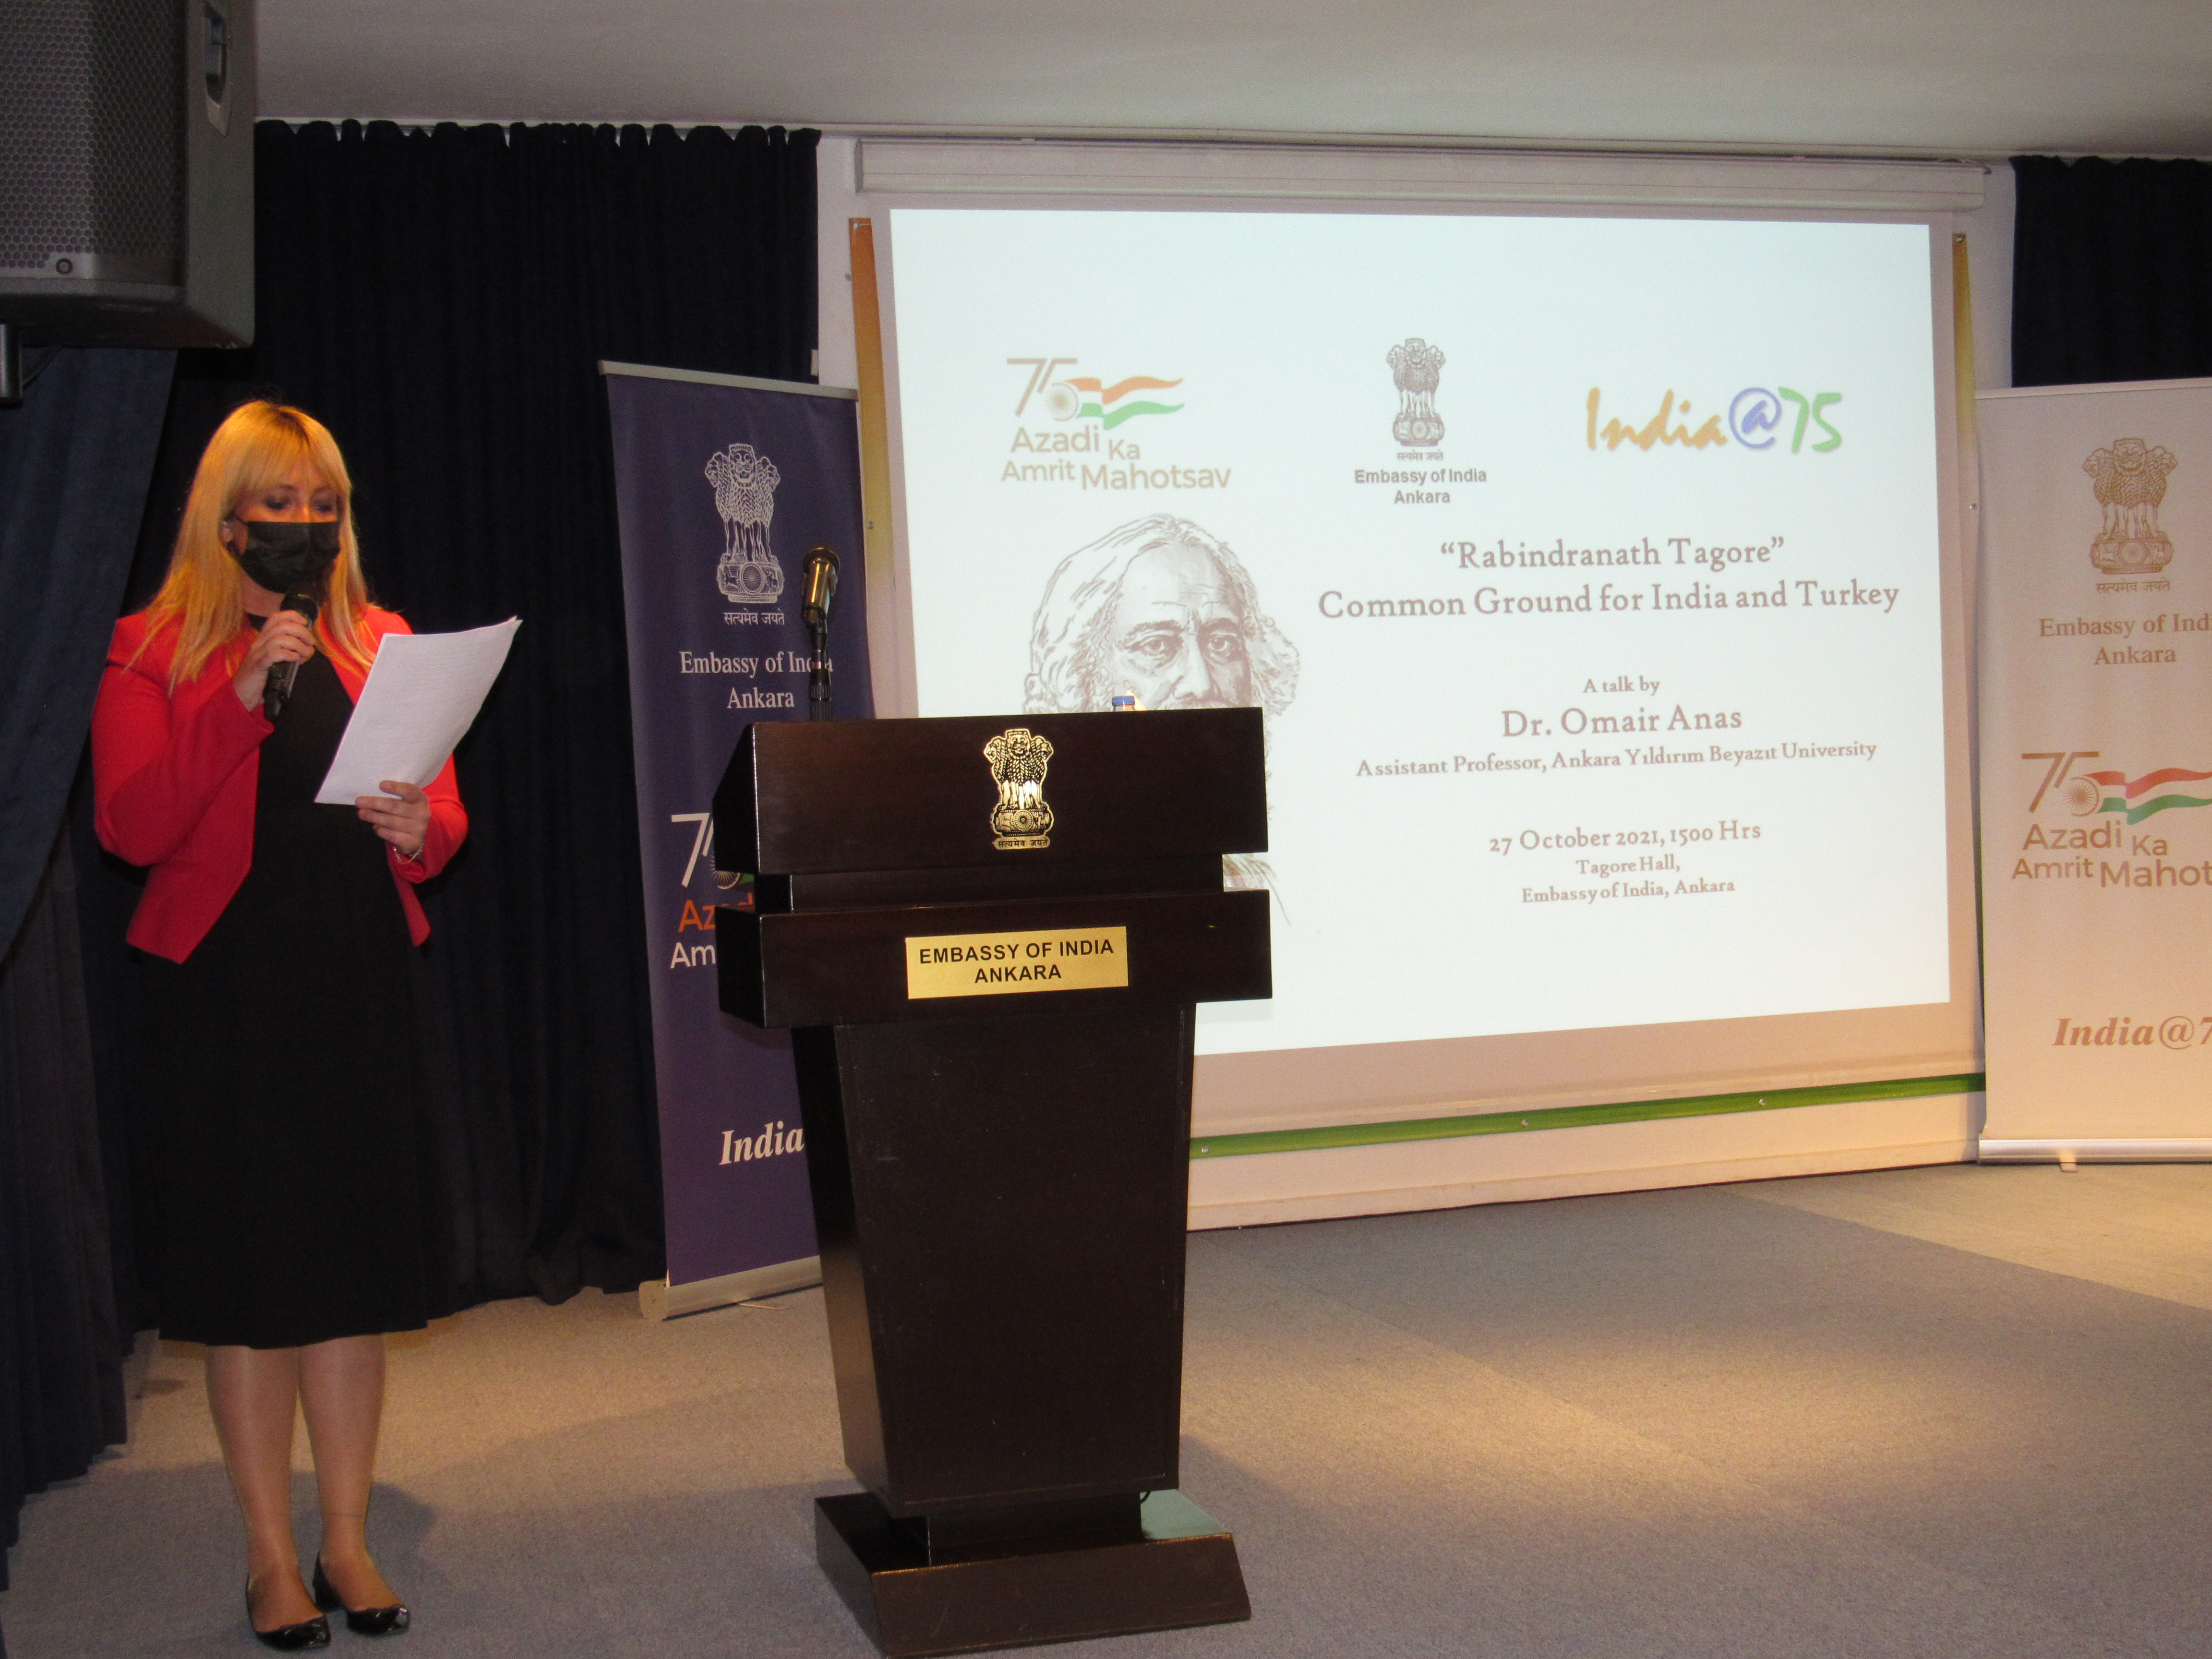 A Talk on Rabindranath Tagore to Commemorate India@75